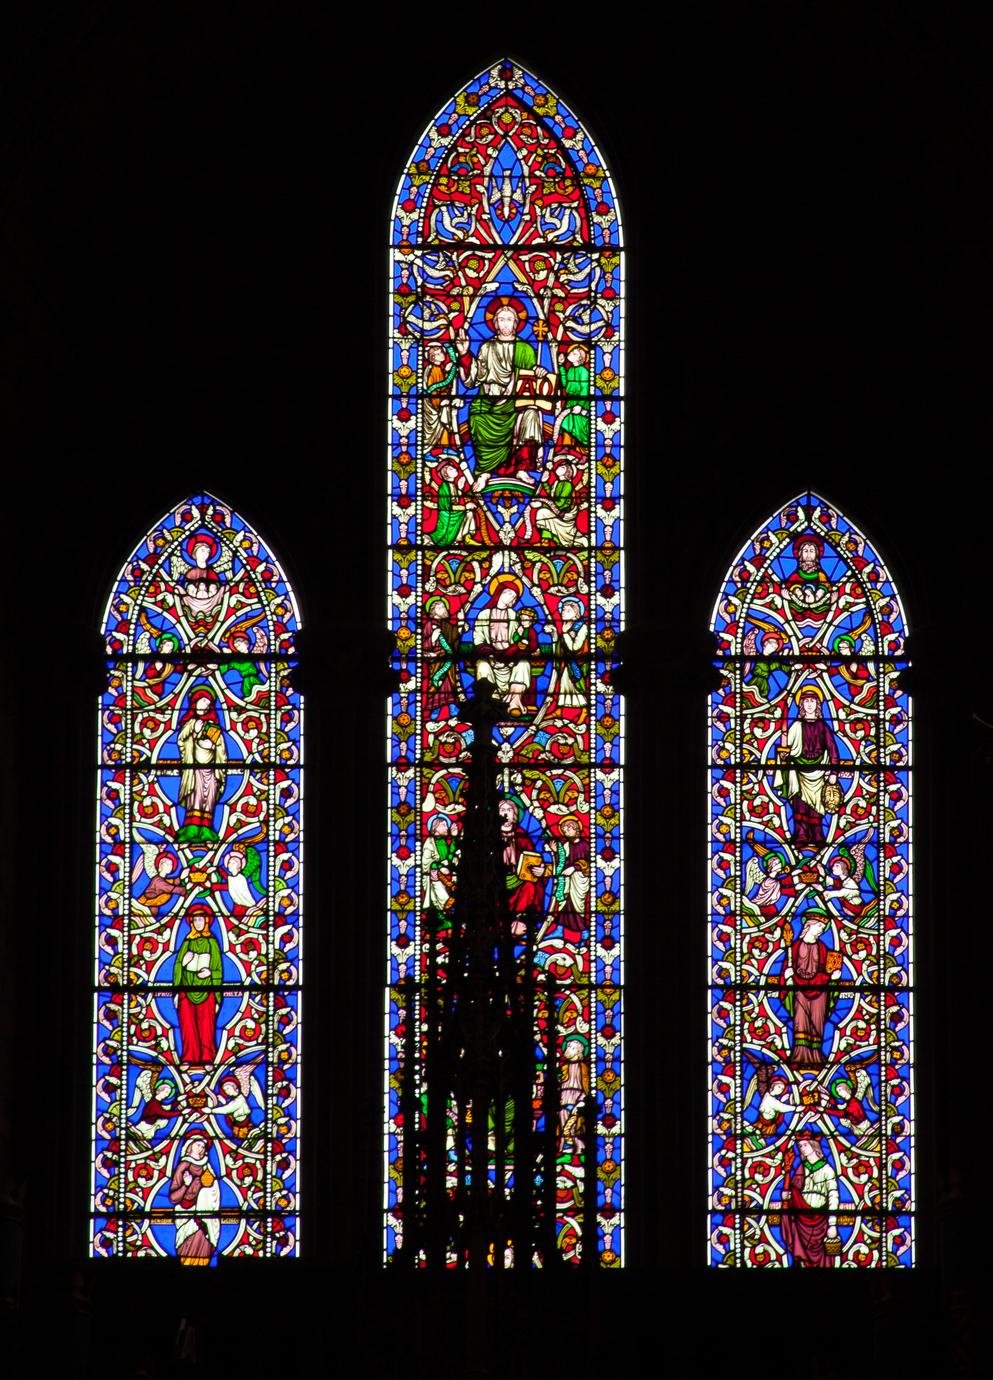 Worcester Cathedral interior southwest transept